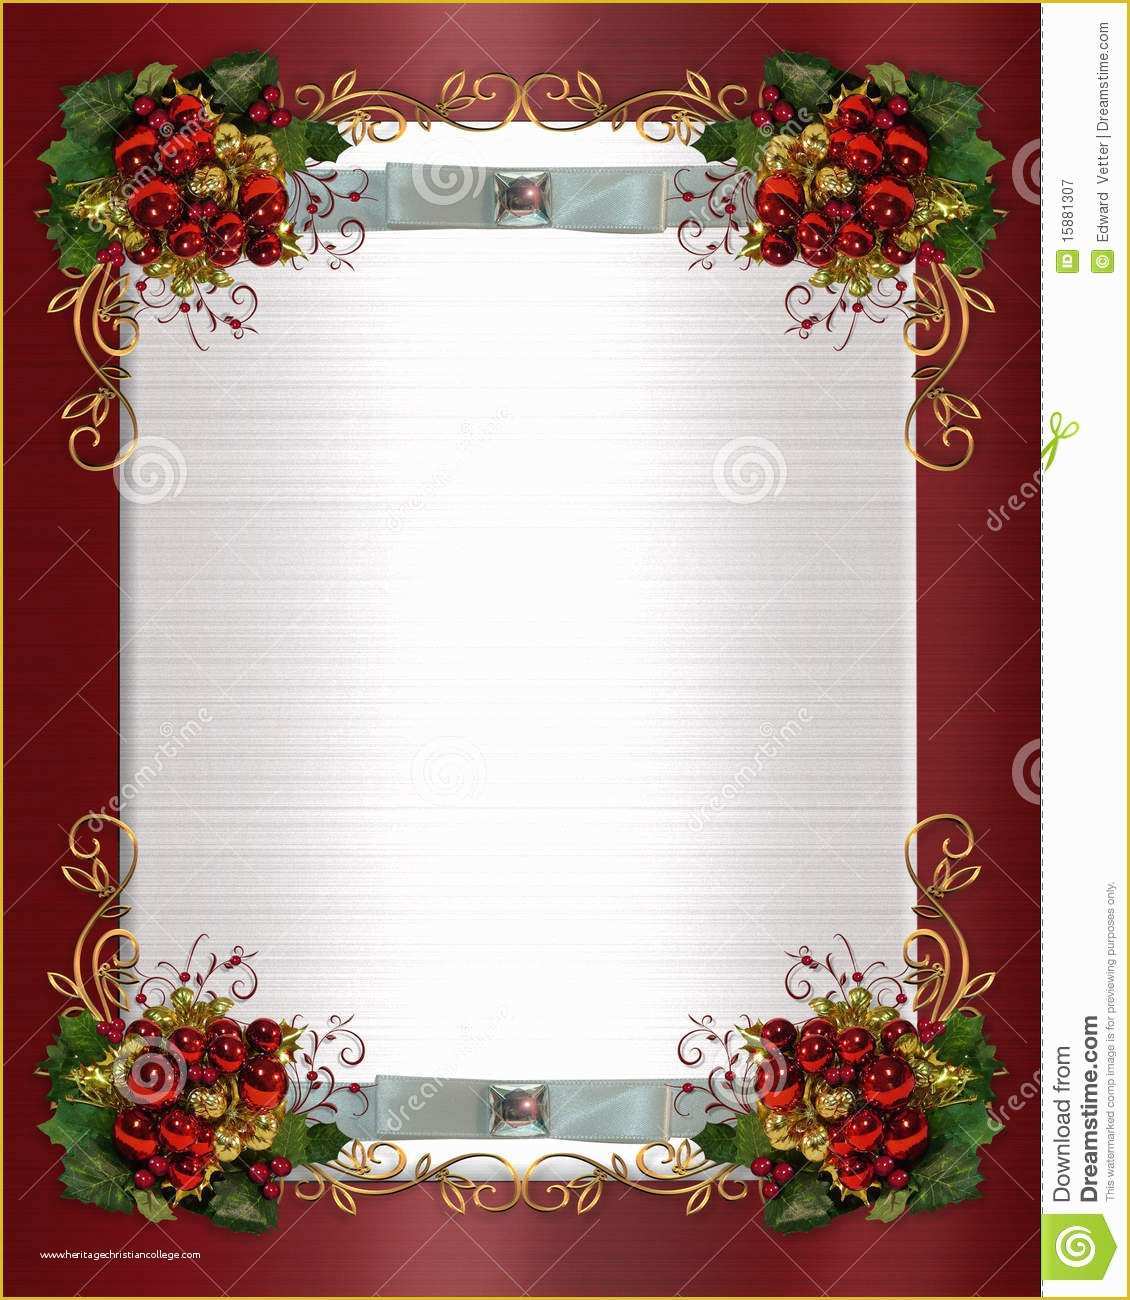 Christmas Border Templates Free Download Of Free Printable Christmas Borders for Invitations